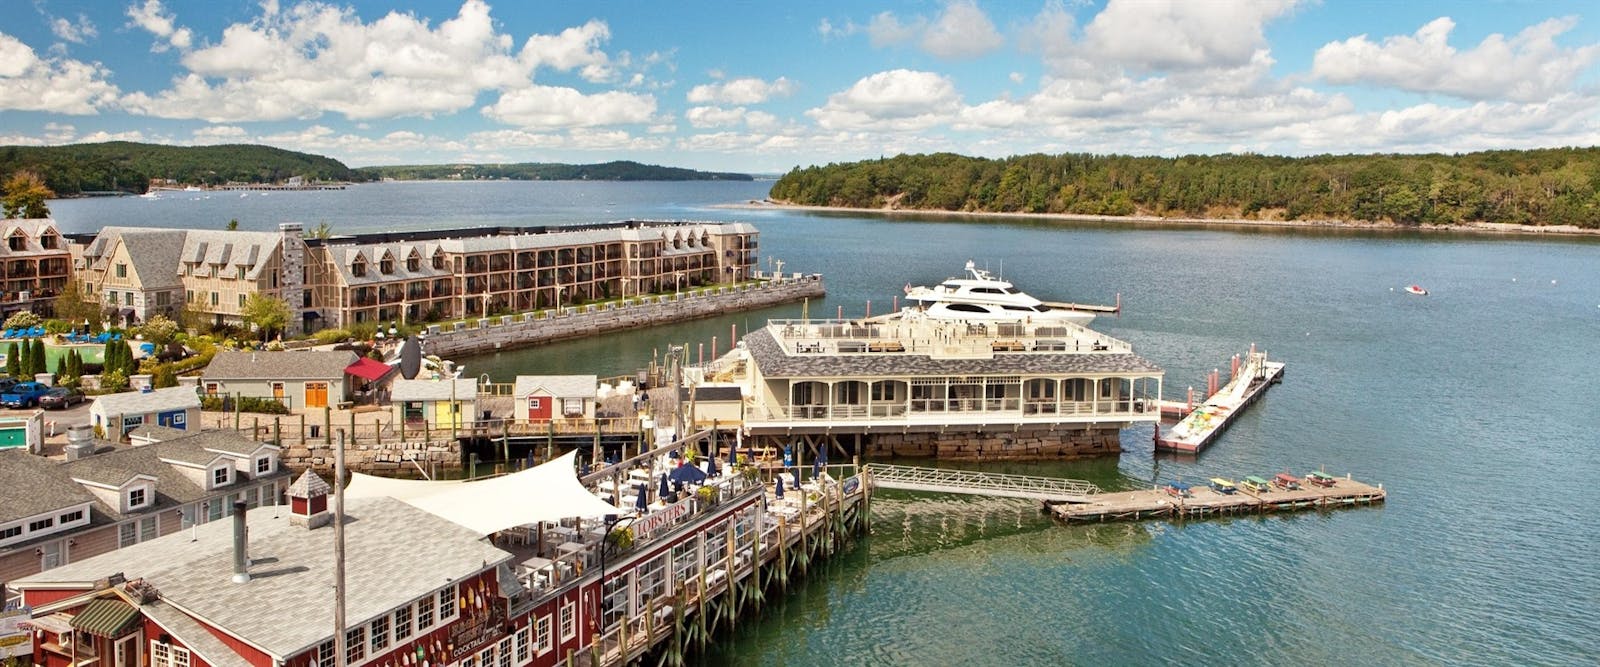 Harborside Hotel, Spa & Marina | Luxury Resort Maine, USA